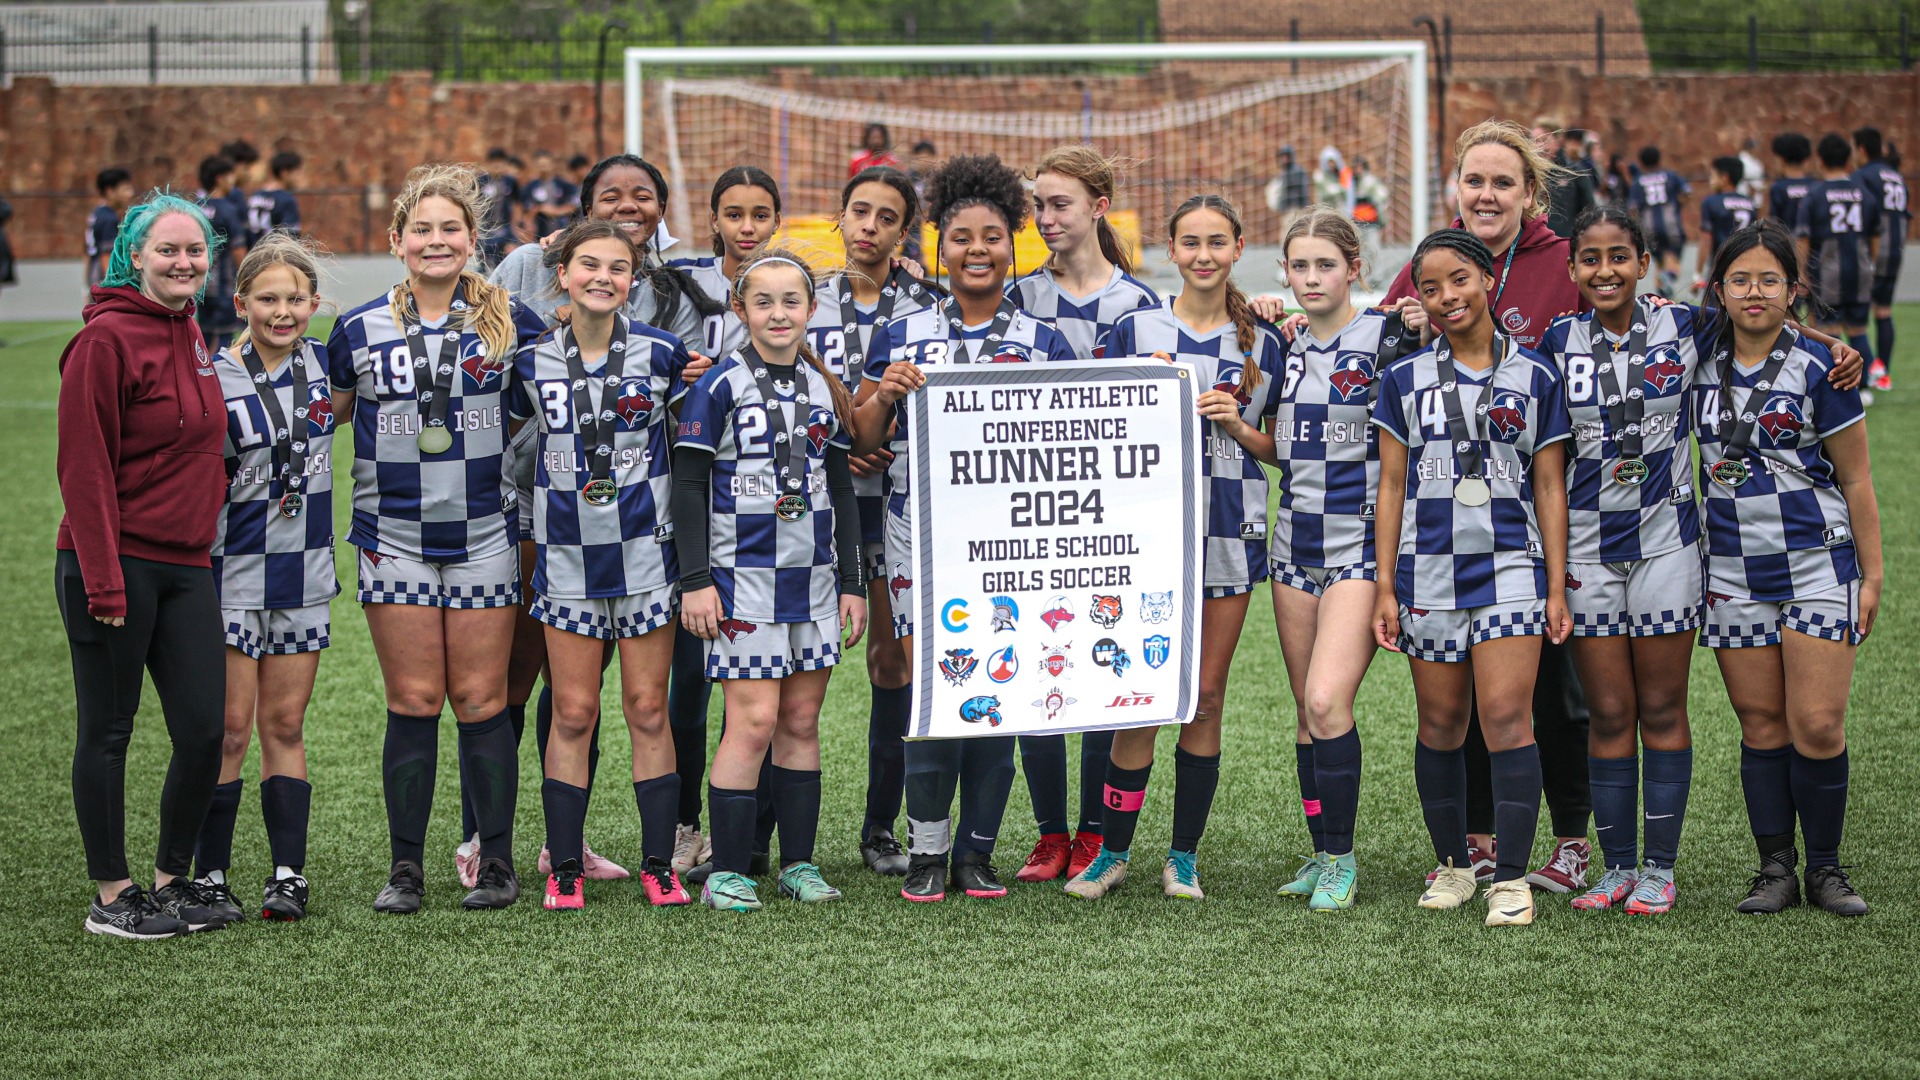 Slide 0 - Lady Bulls' Soccer Receive ACAC Runner-Up Banner